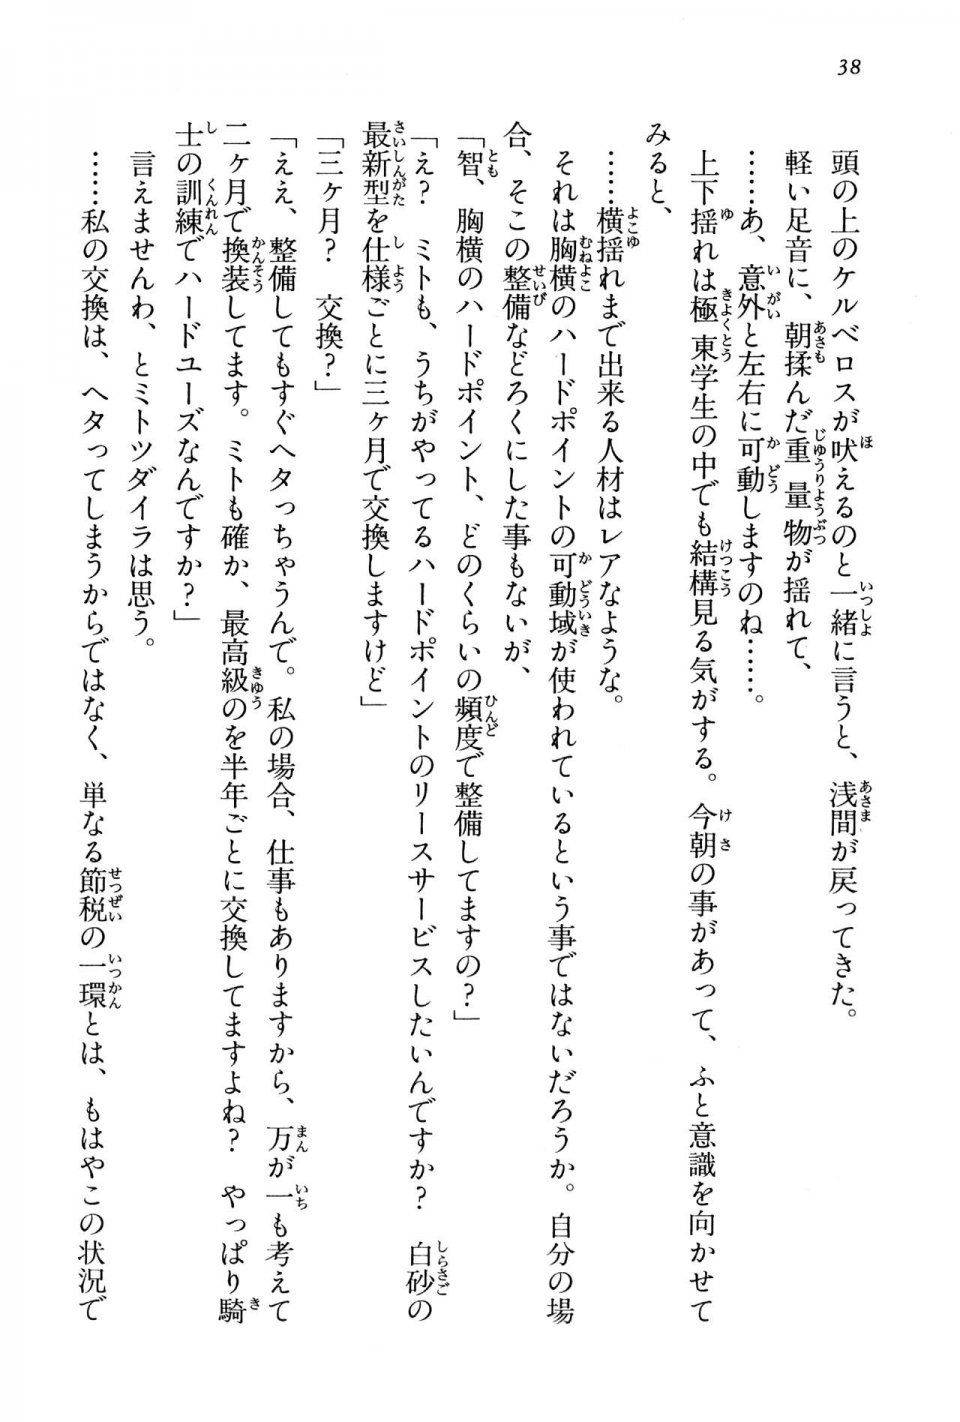 Kyoukai Senjou no Horizon BD Special Mininovel Vol 3(2A) - Photo #42